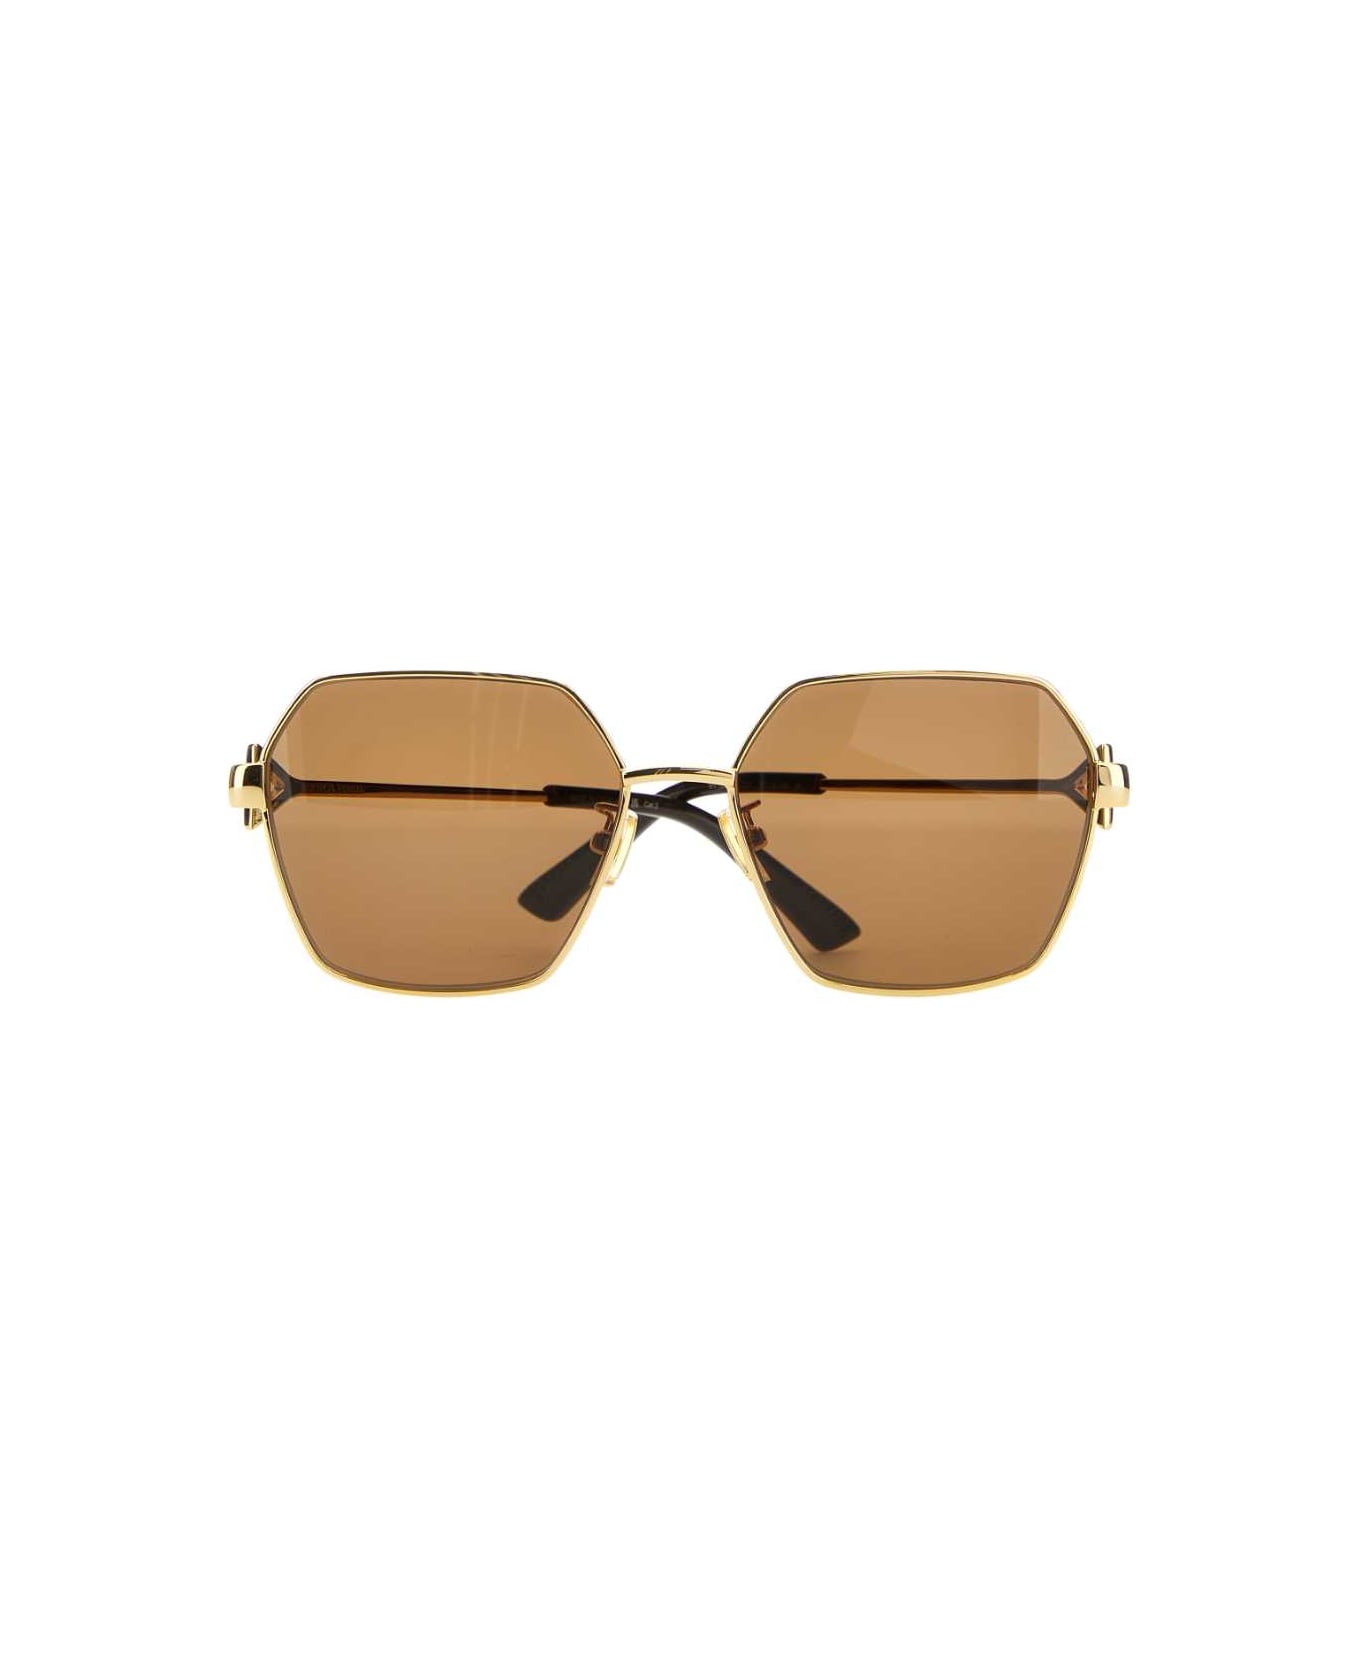 Bottega Veneta Gold Metal Sunglasses - GOLDBROWN サングラス